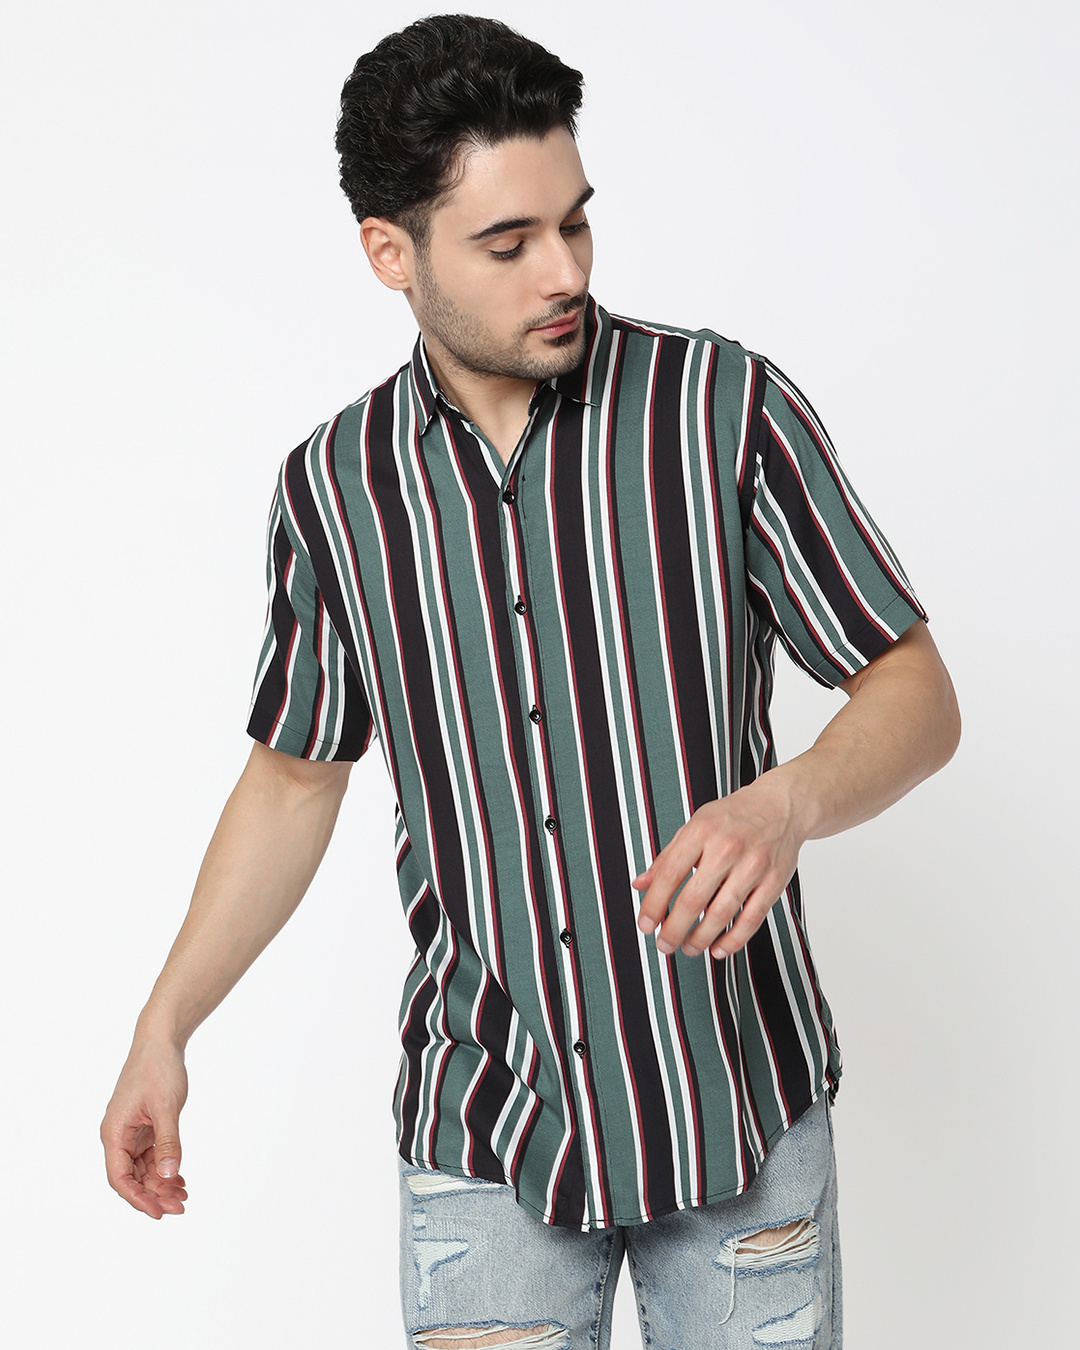 Buy Men's Army Green & Black Striped Shirt Online at Bewakoof